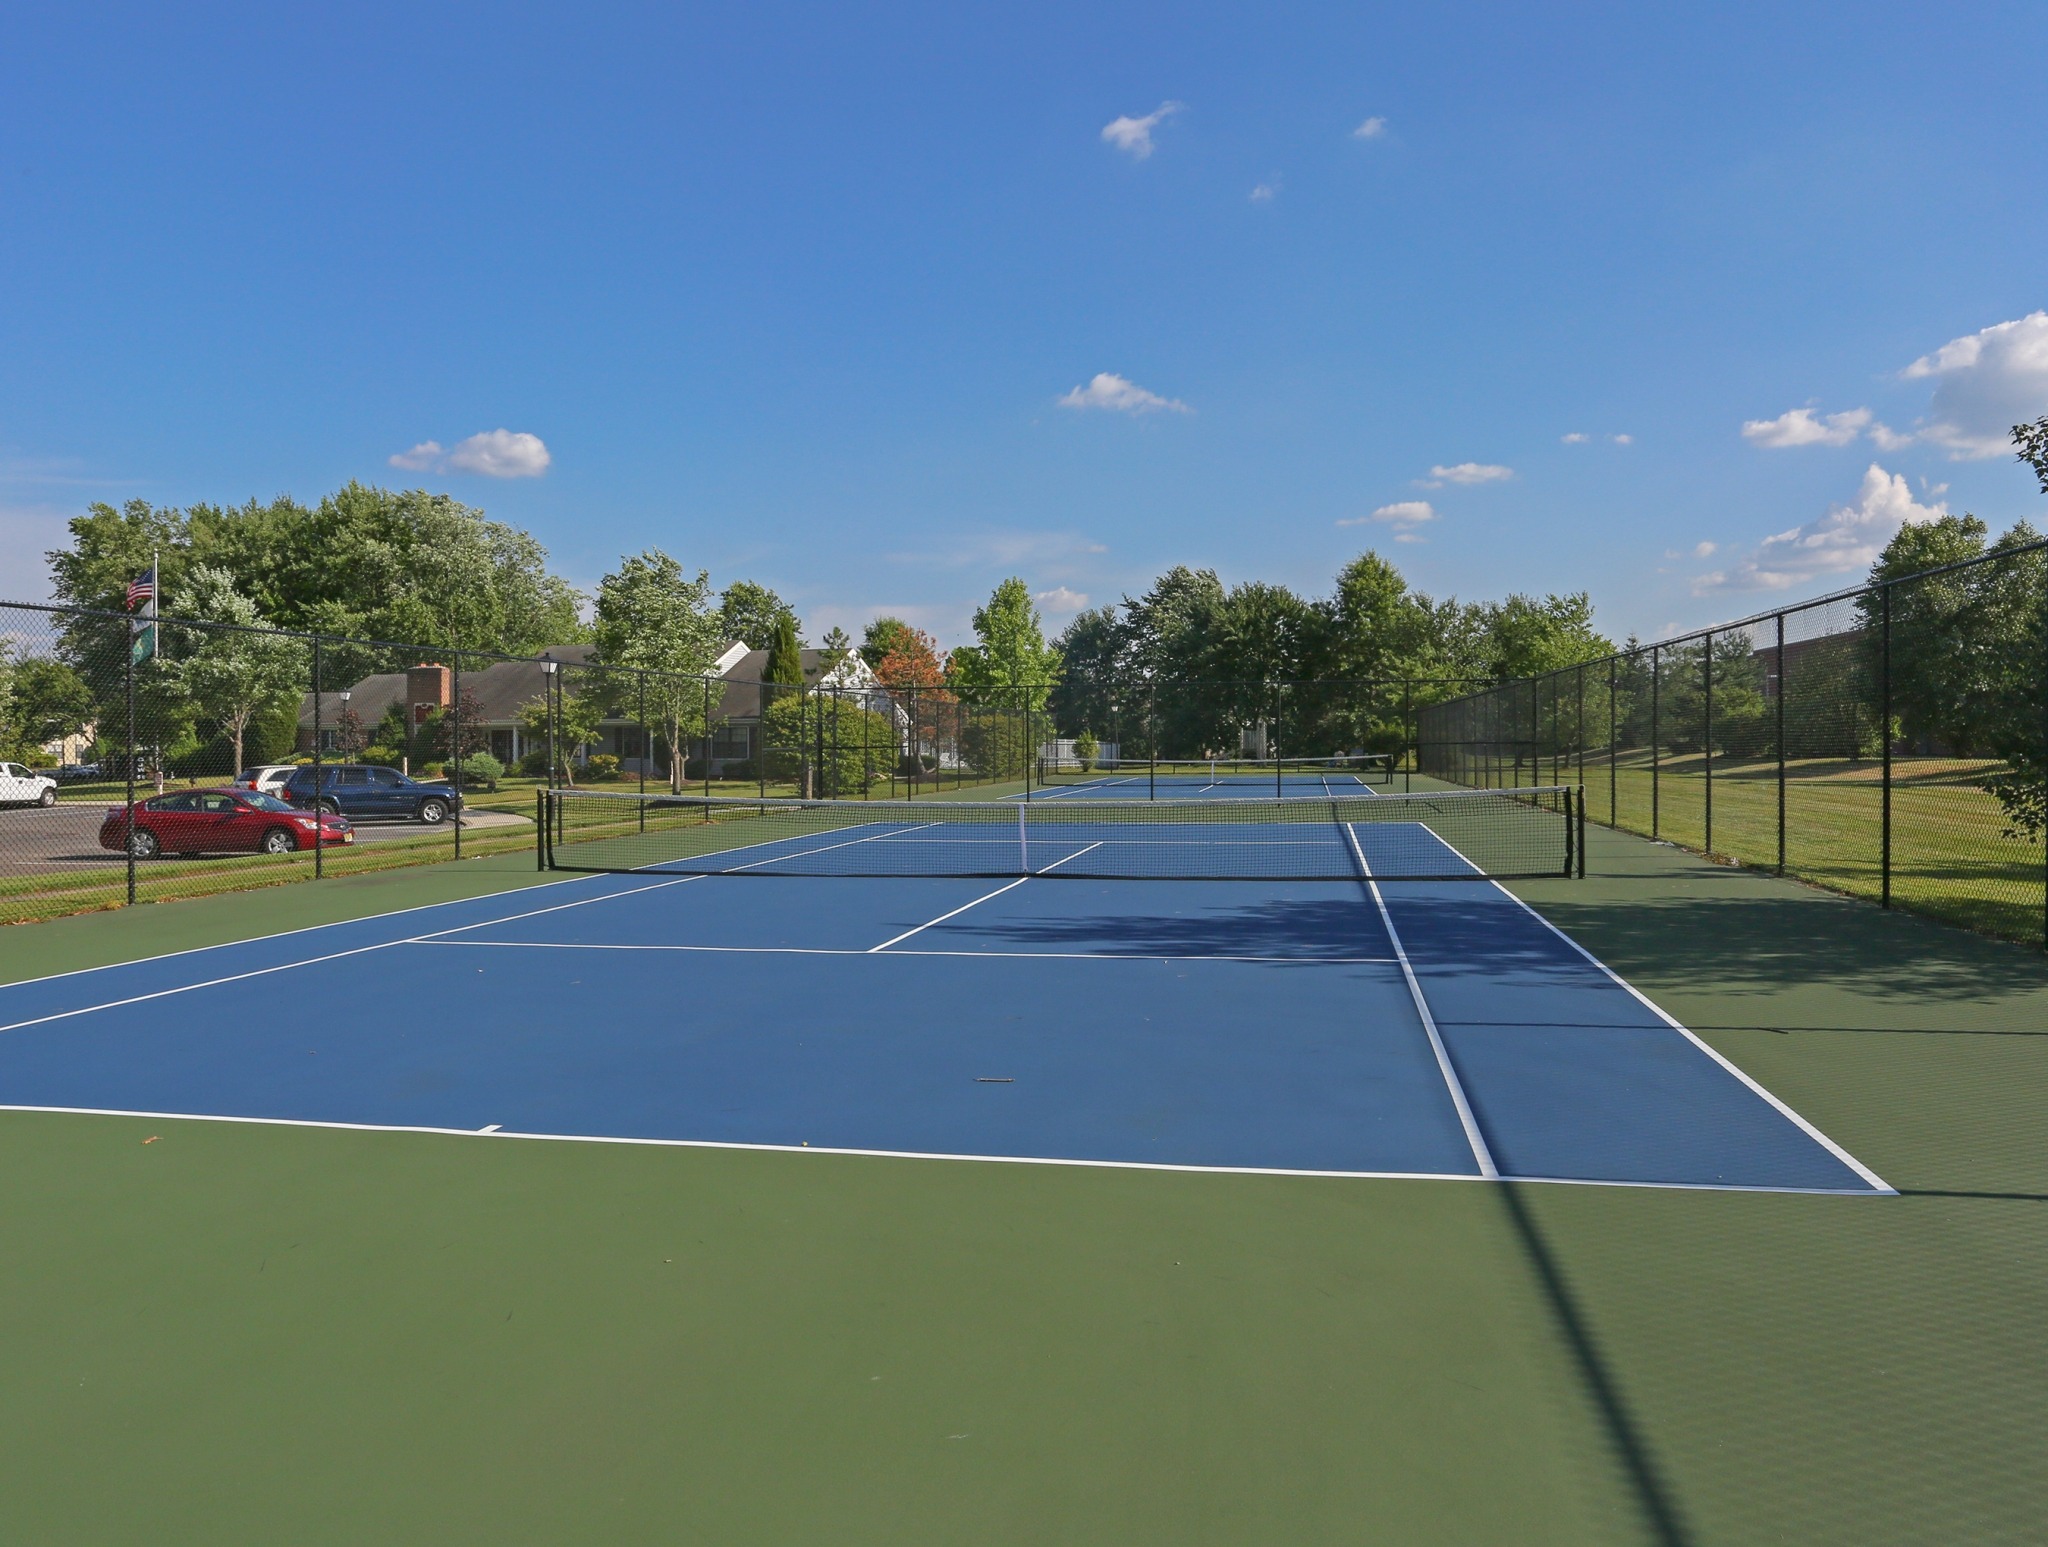 Willow Ridge Village tennis court with parking lot